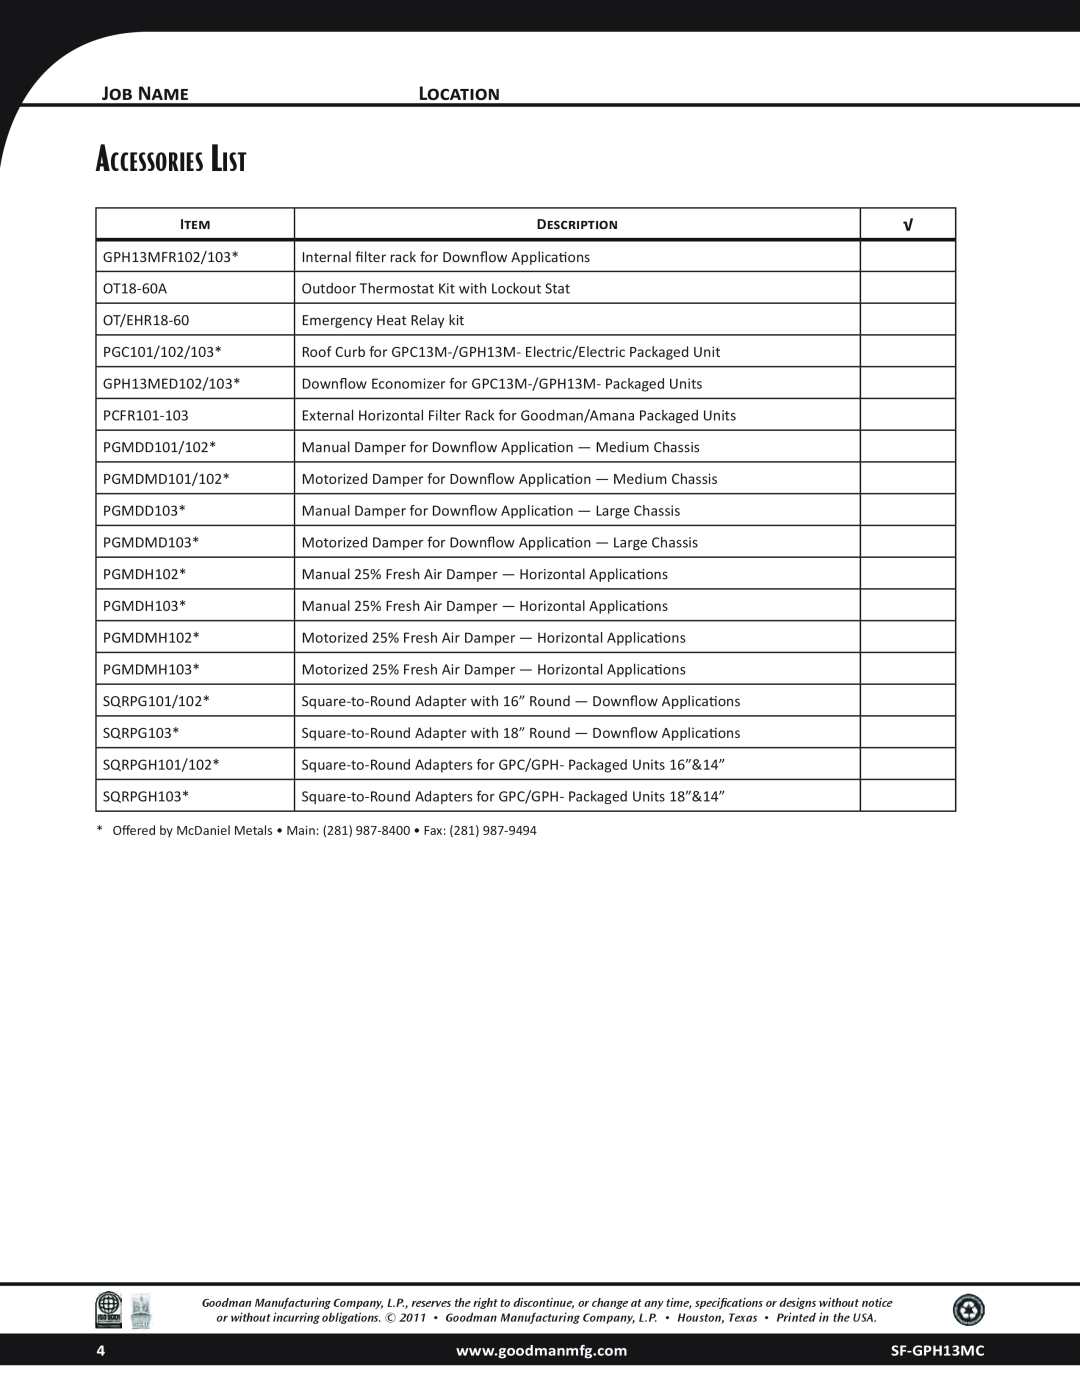 Goodman Mfg dimensions Accessories List, Job Name, Location, Description, SF-GPH13MC 